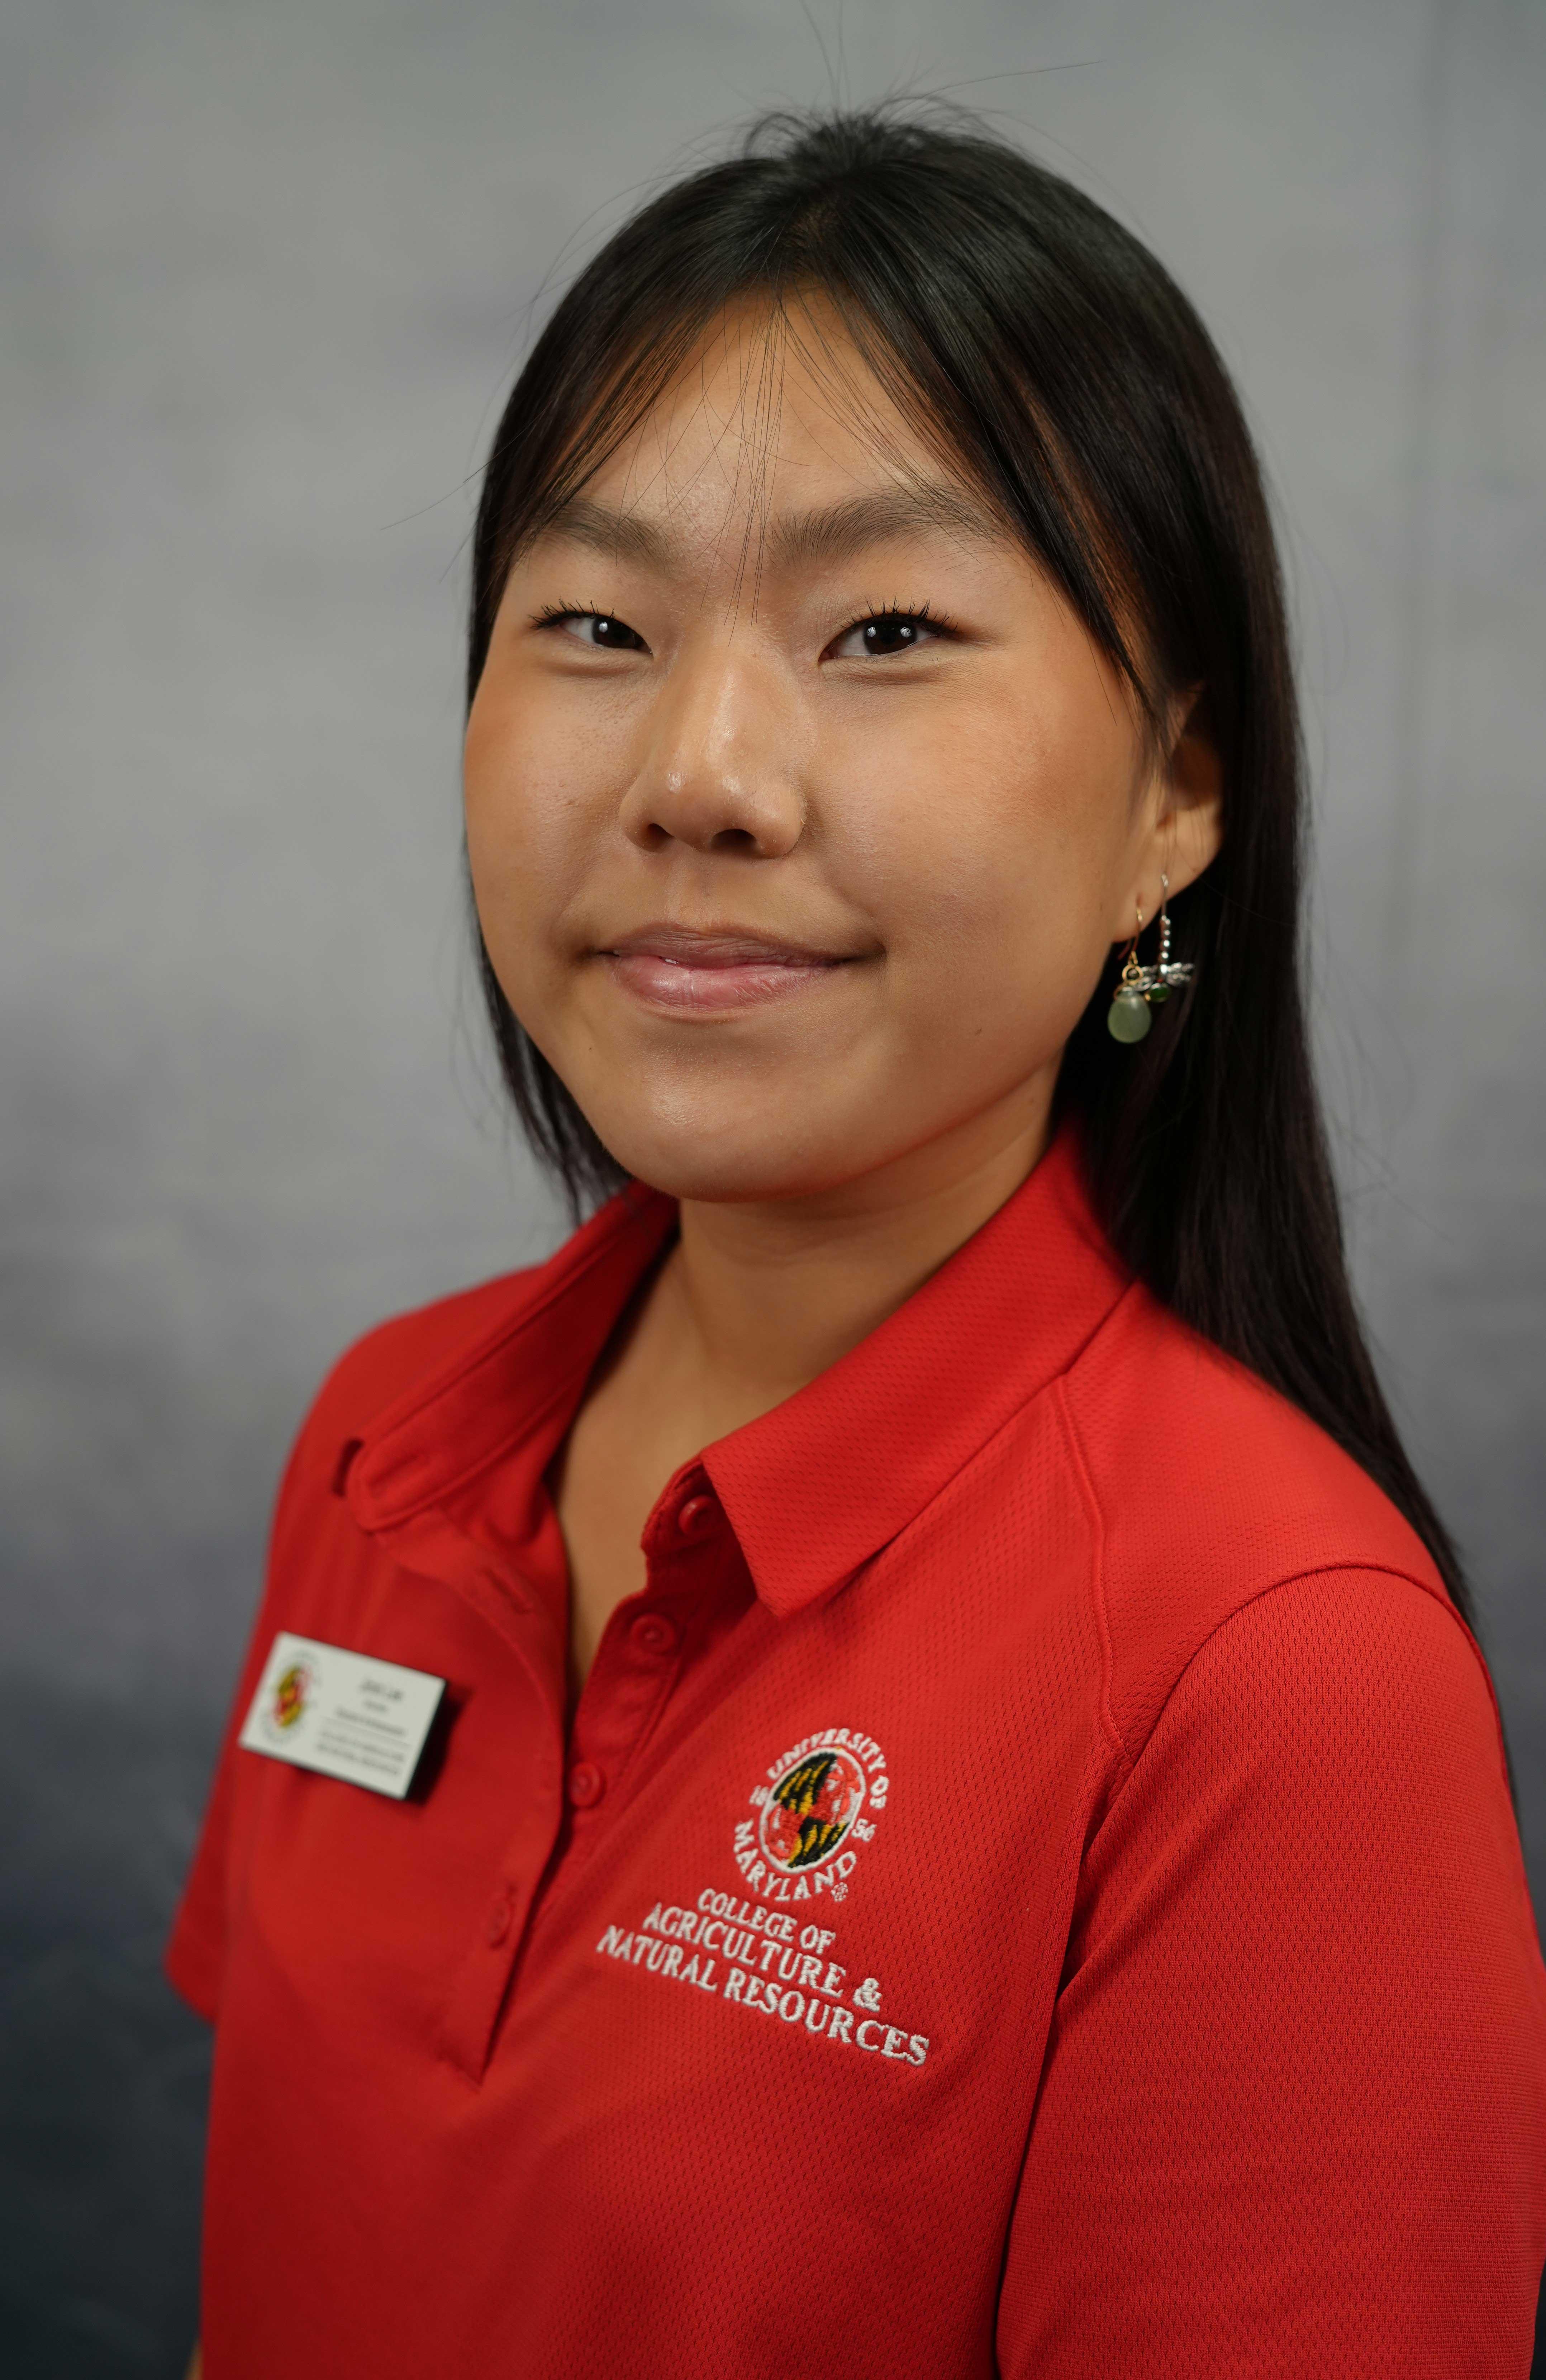 Professional image of kind-eyed student wearing red Ambassador uniform polo.